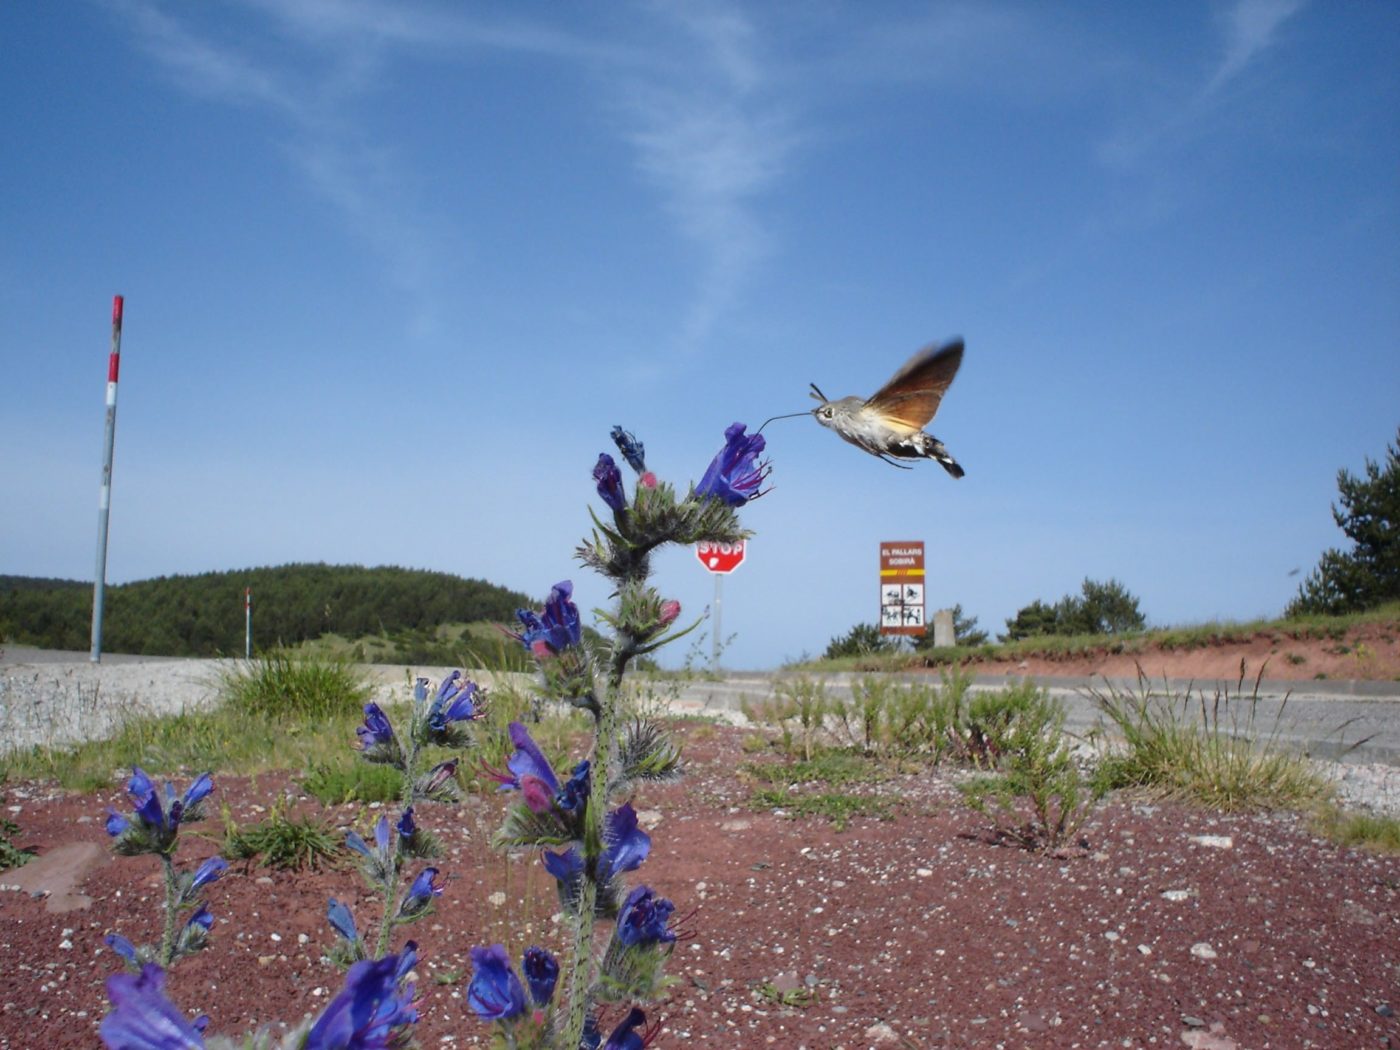 Spanish Flyer, Hummingbird hawk-moth, Macroglossum stellatarum, feeding